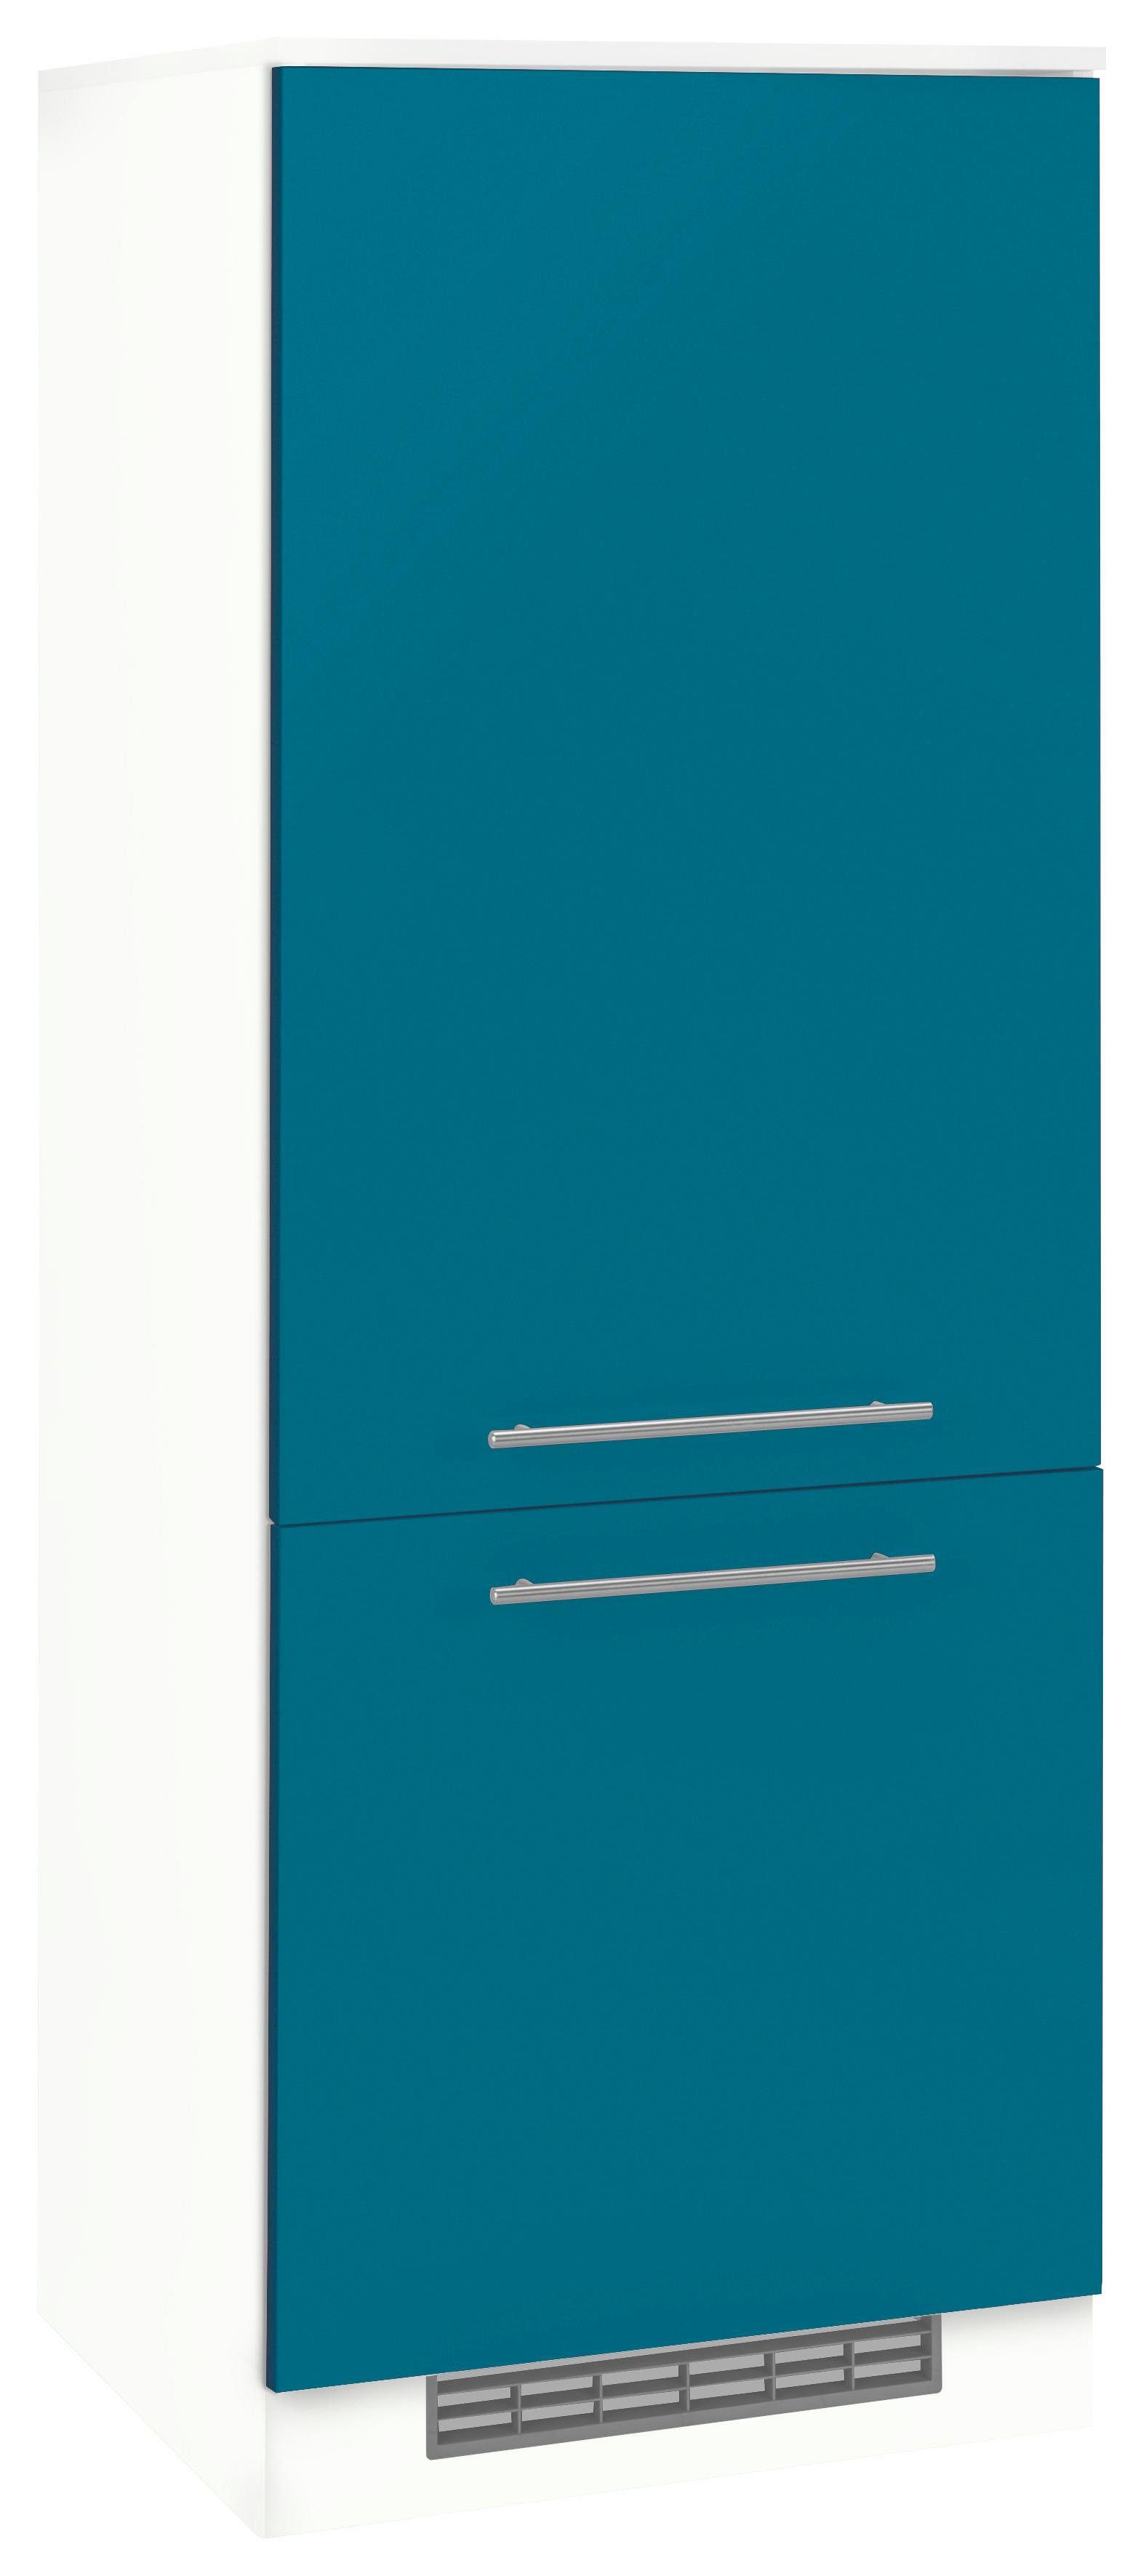 Kühlumbauschrank Küchen ozeanblau/weiß Flexi2 wiho